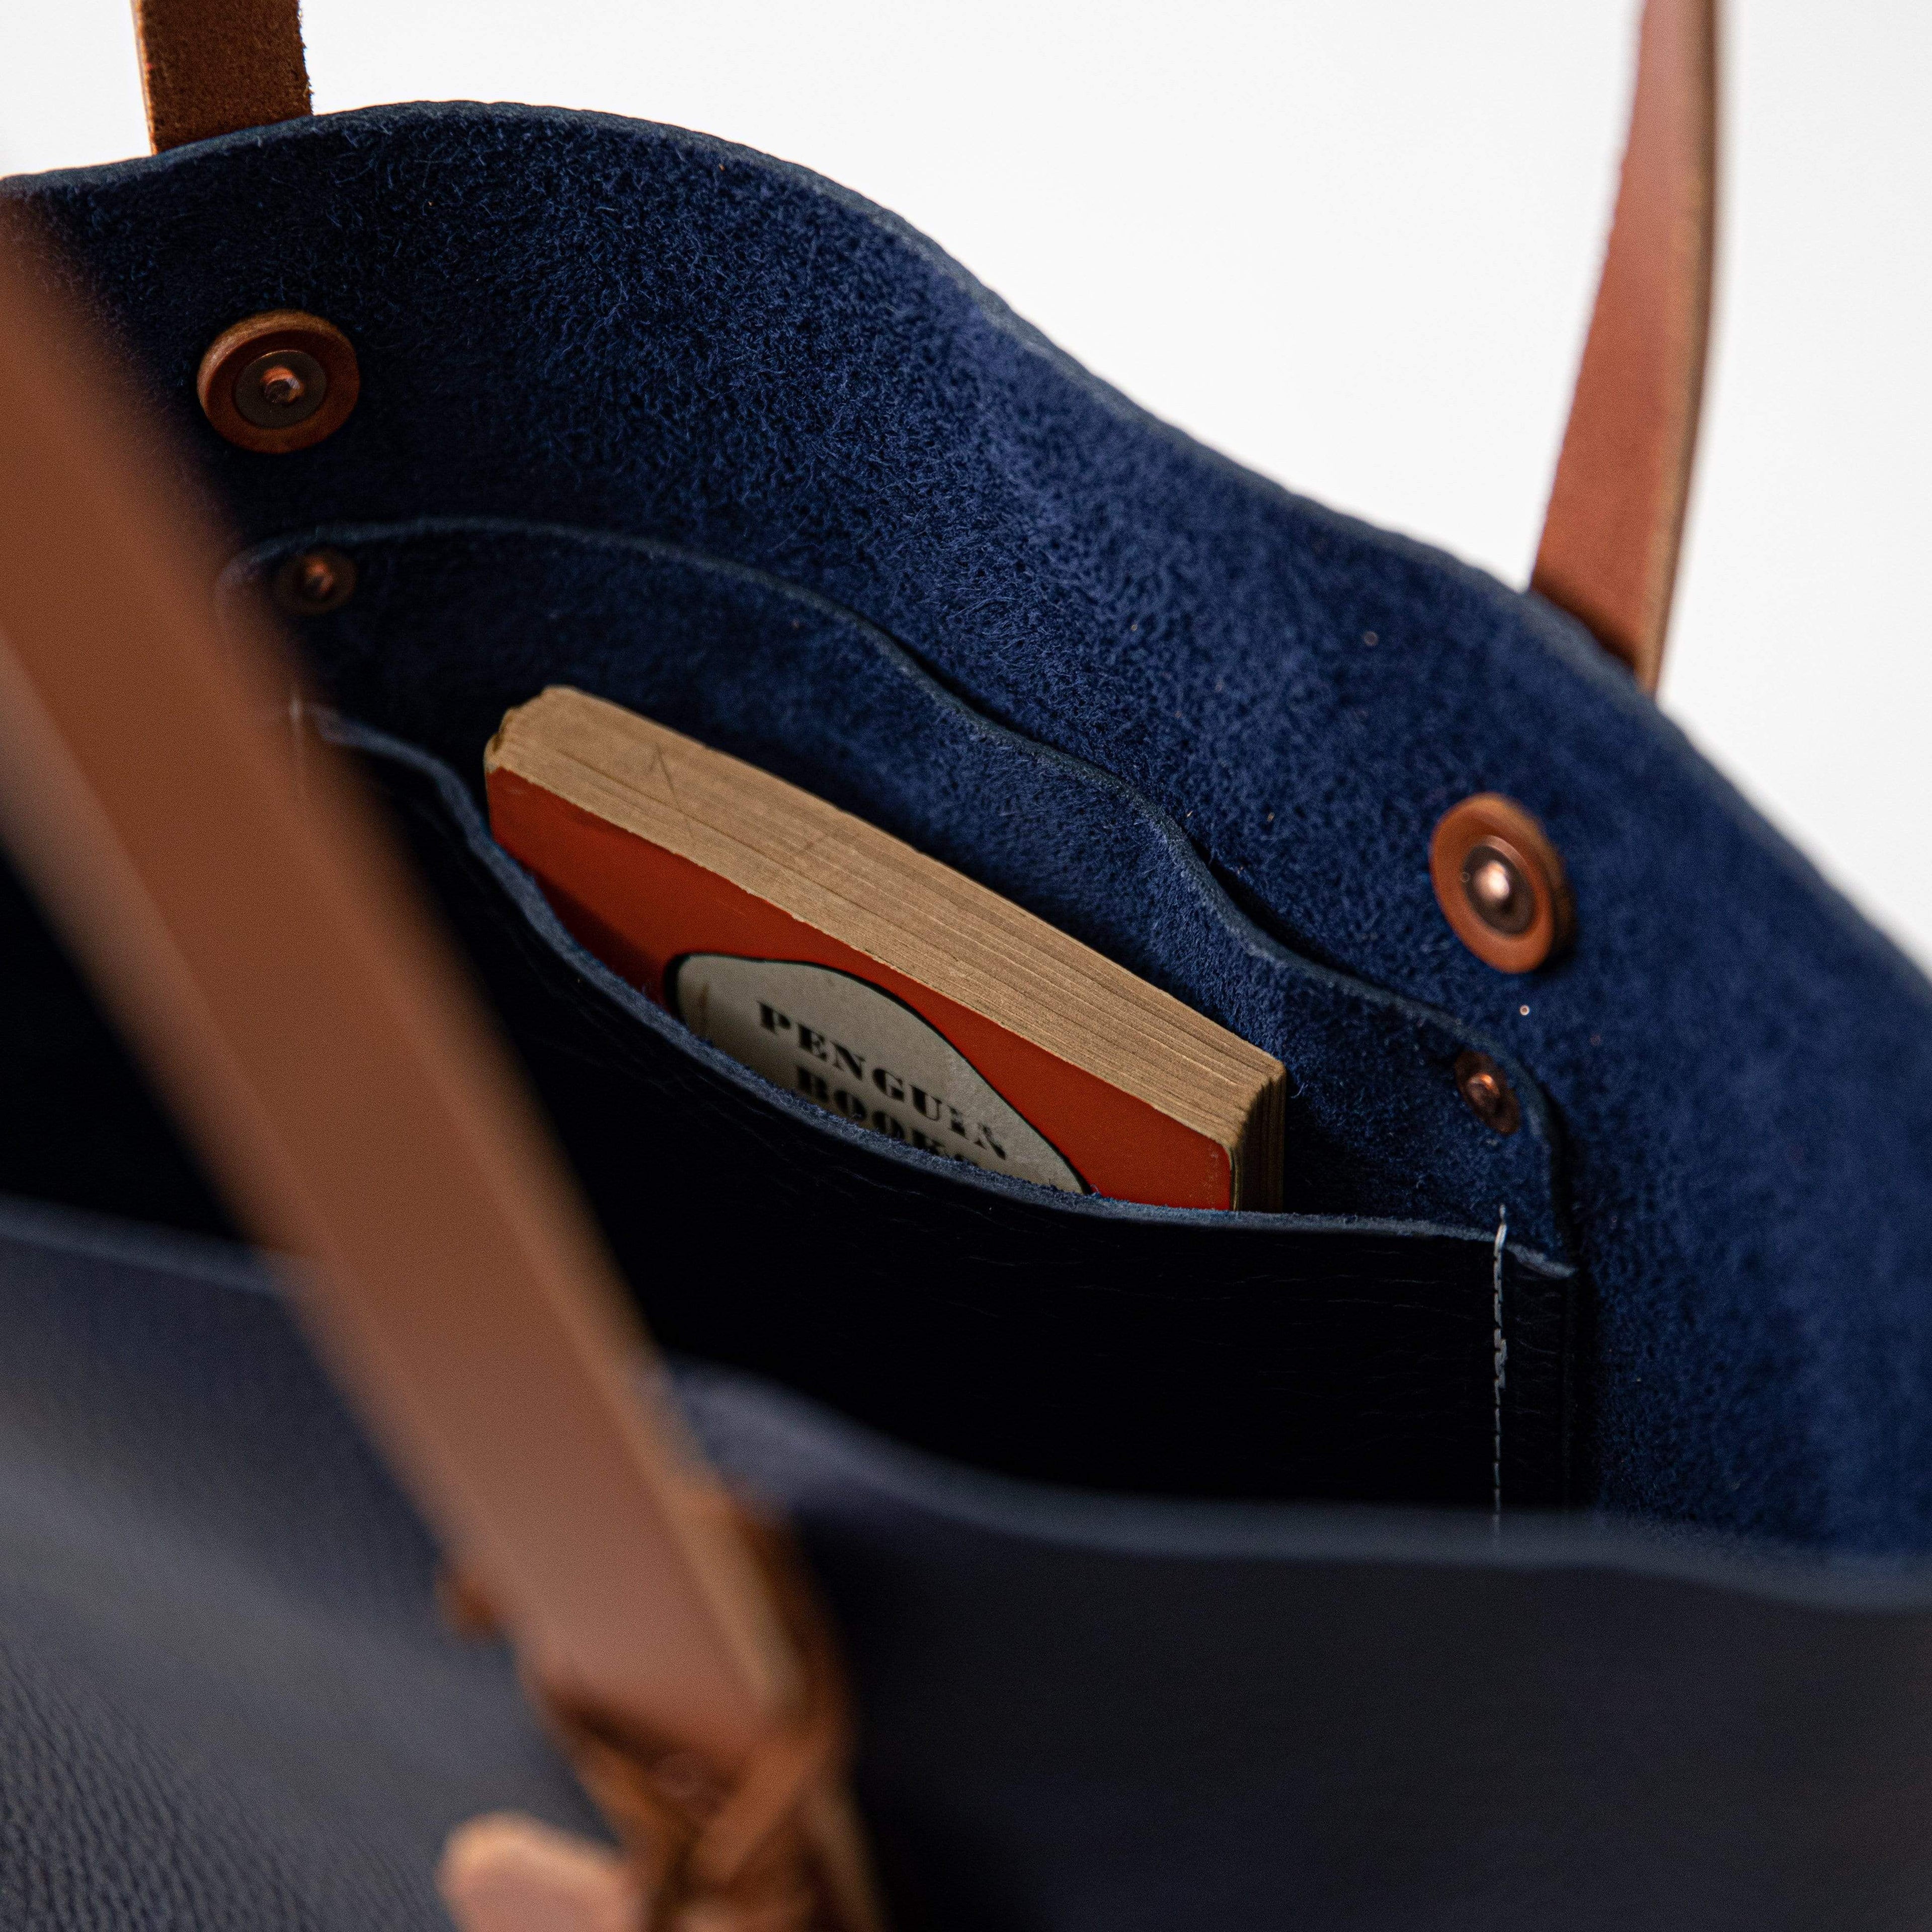 Leather Tote Bags: Tan Kodiak Tote | Leather Handbags by KMM & Co. 10-Inch +$25 / D-Rings (FINAL SALE) +$25